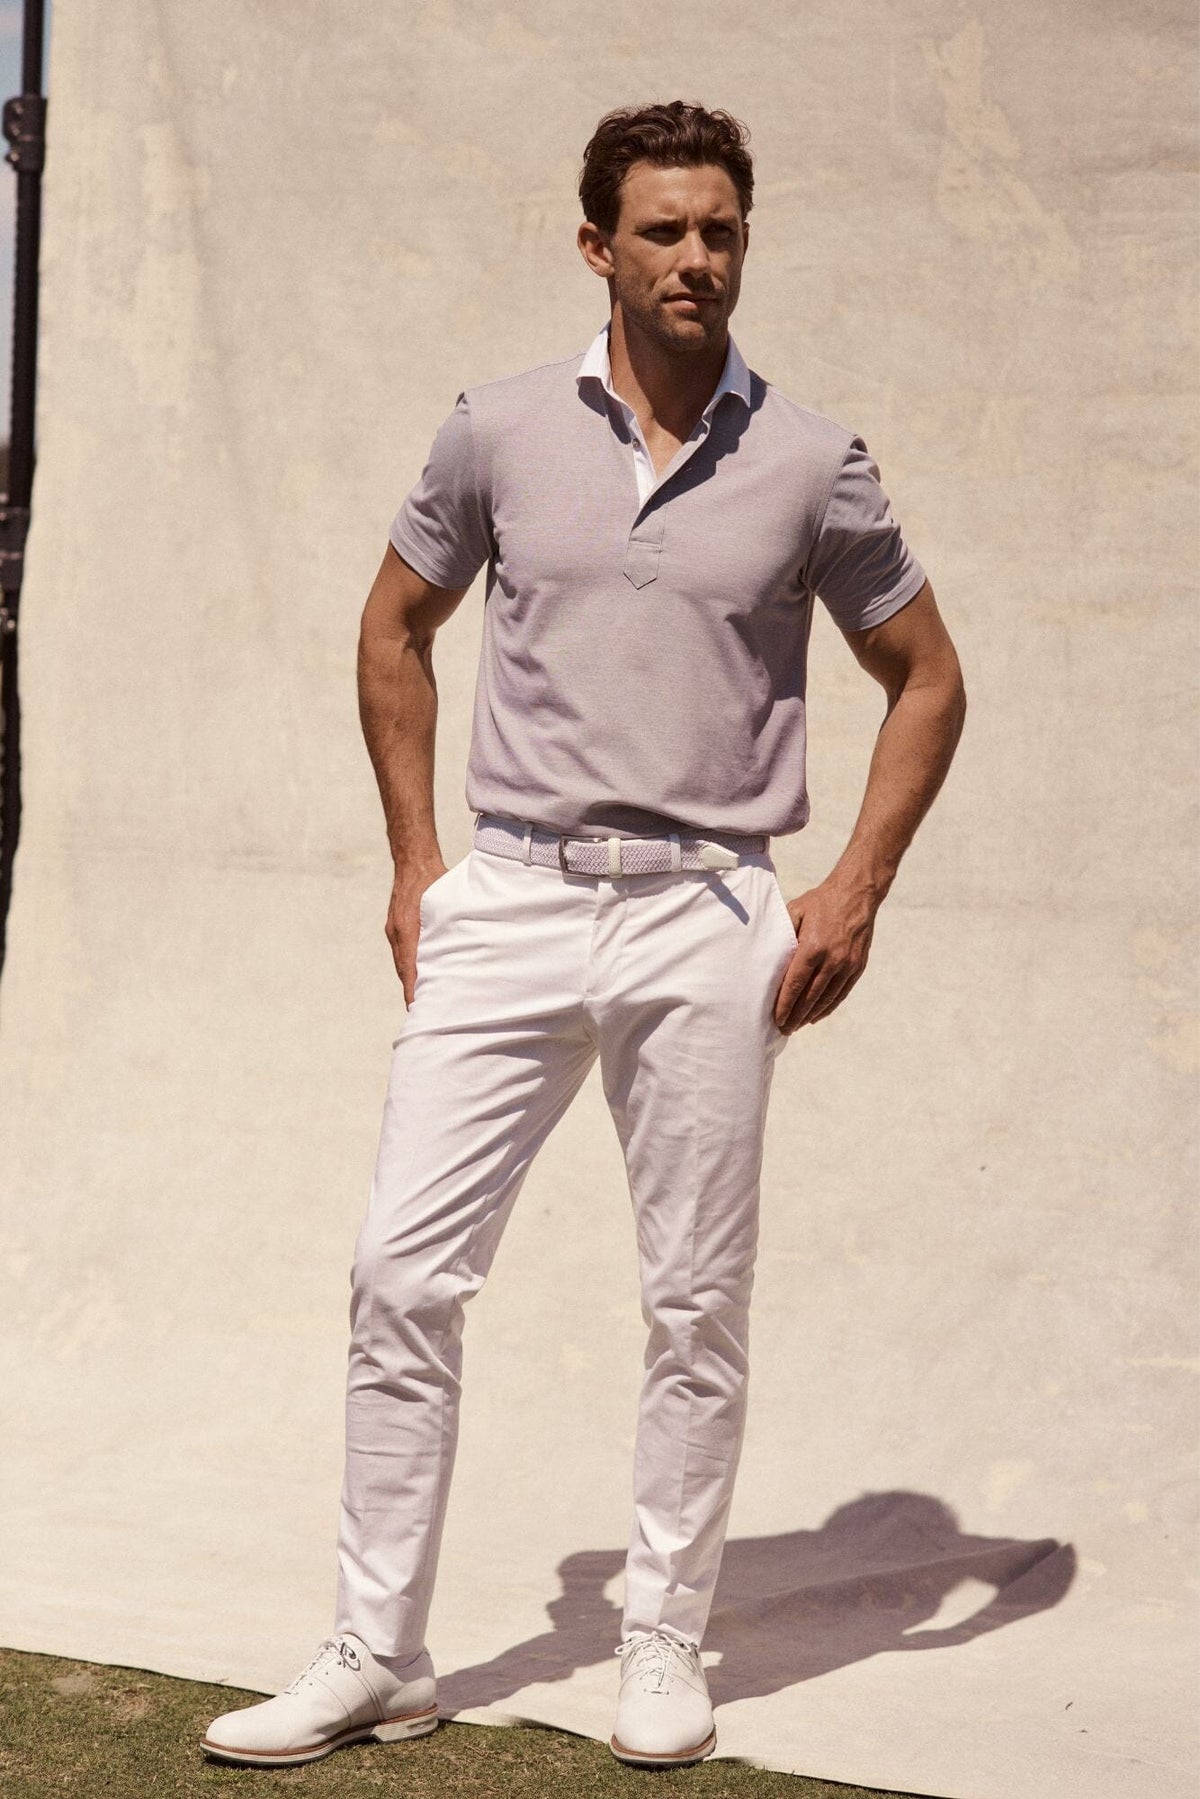 CGC Polo Shirt - Grey Pique with White Contrast